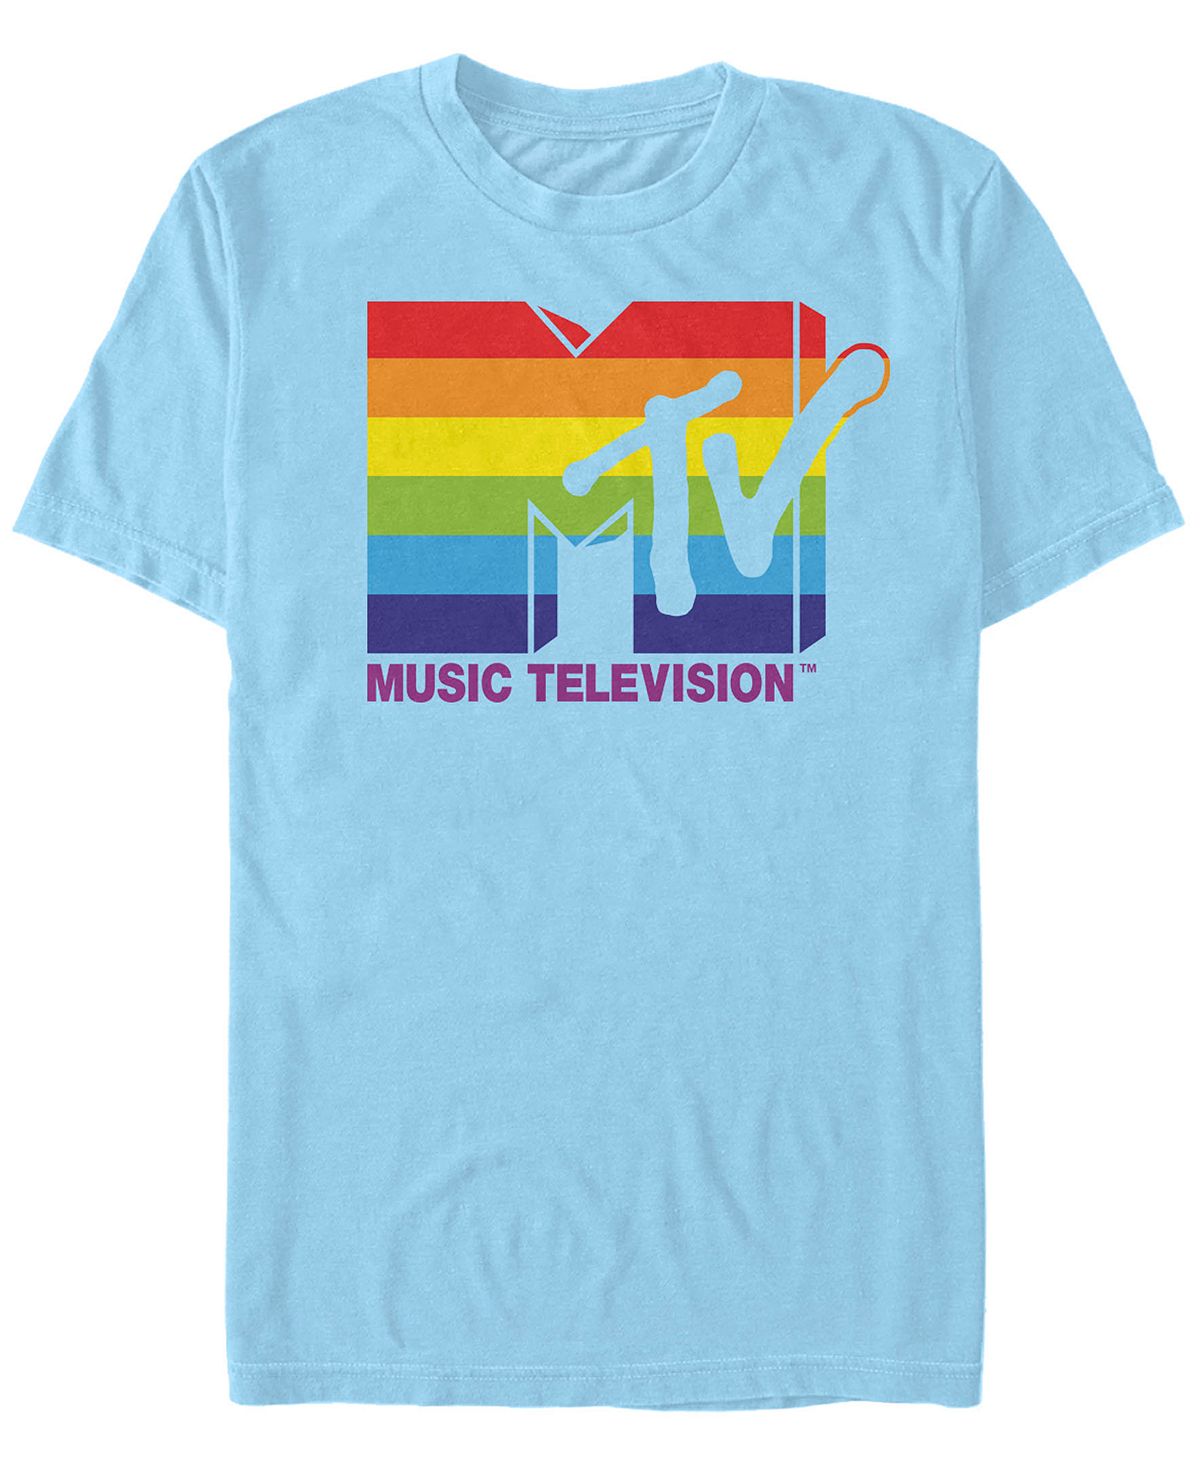 Мужская футболка с коротким рукавом с логотипом rainbow pride Fifth Sun, голубой пульт для телевизора mystery mtv 1914l